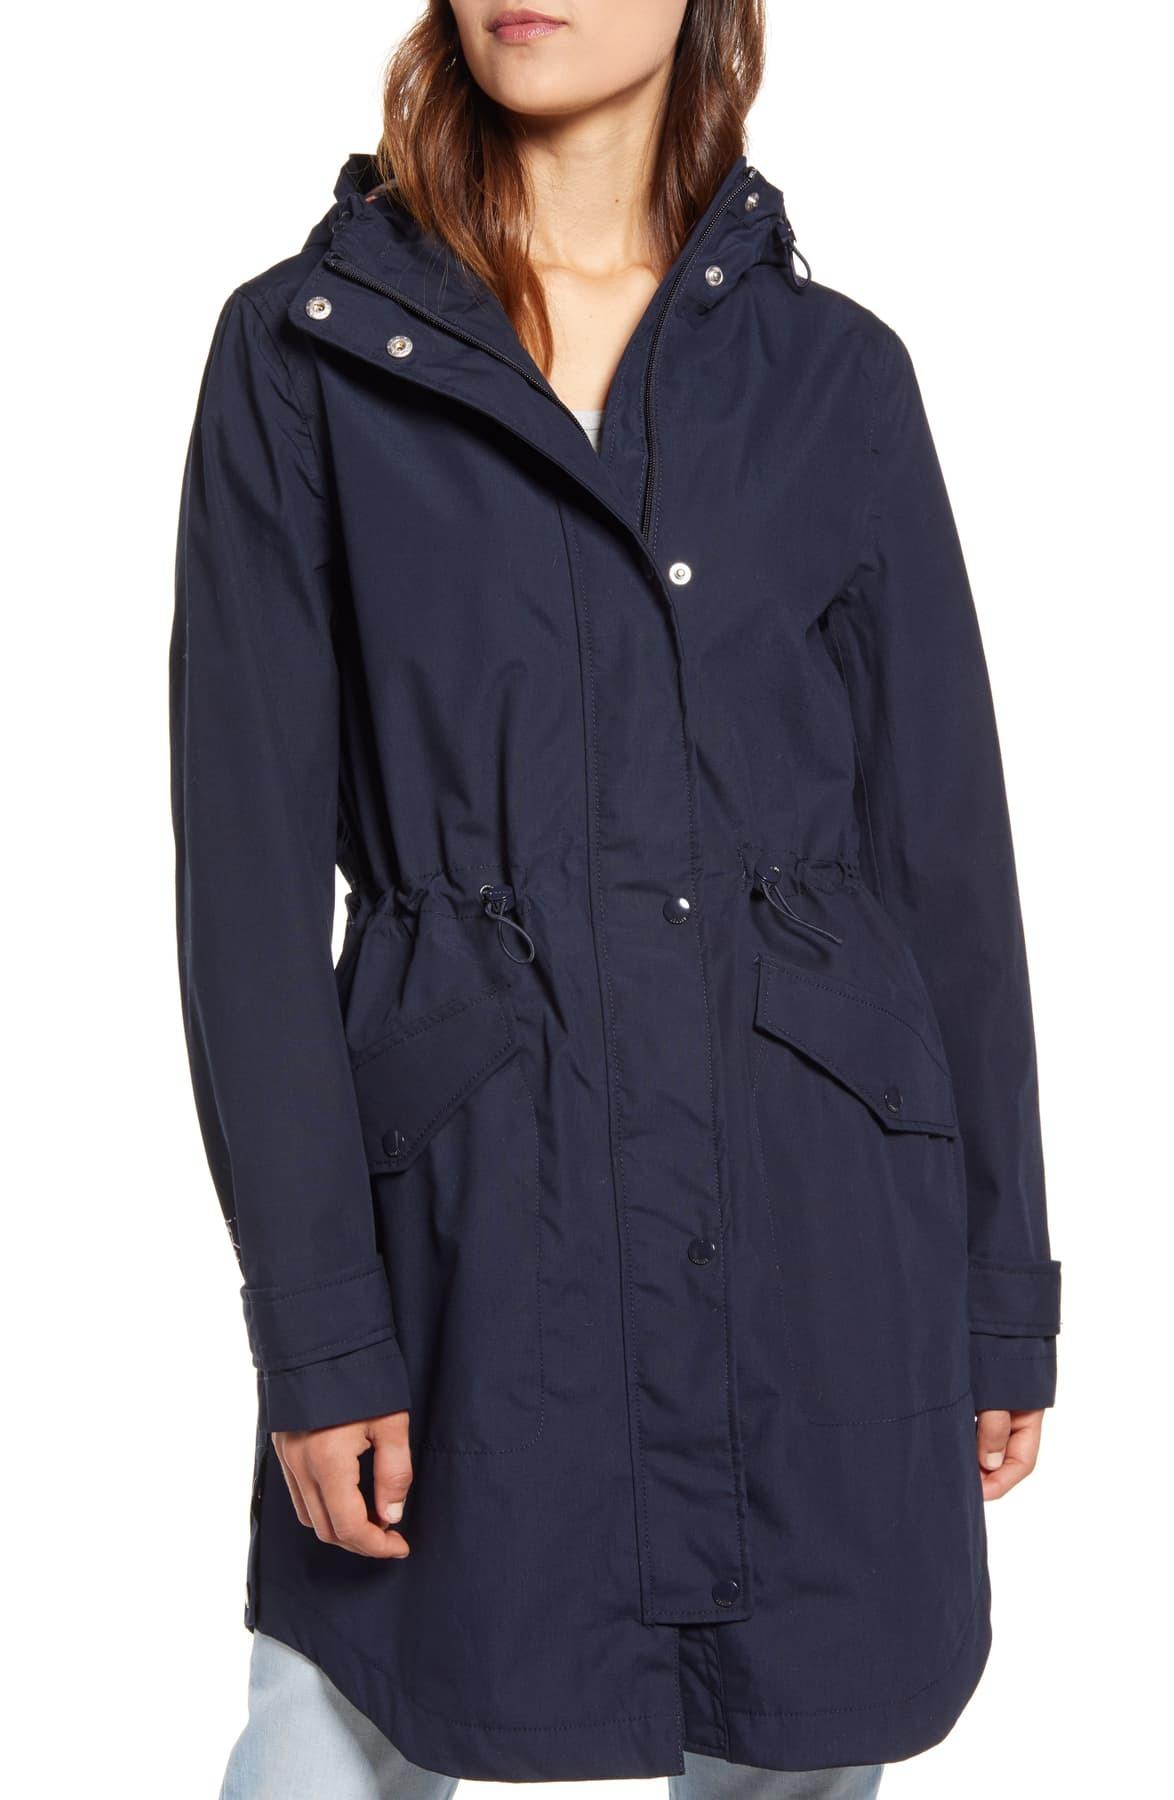 Joules Loxley Waterproof Hooded Raincoat in Marine Navy (Blue) - Lyst